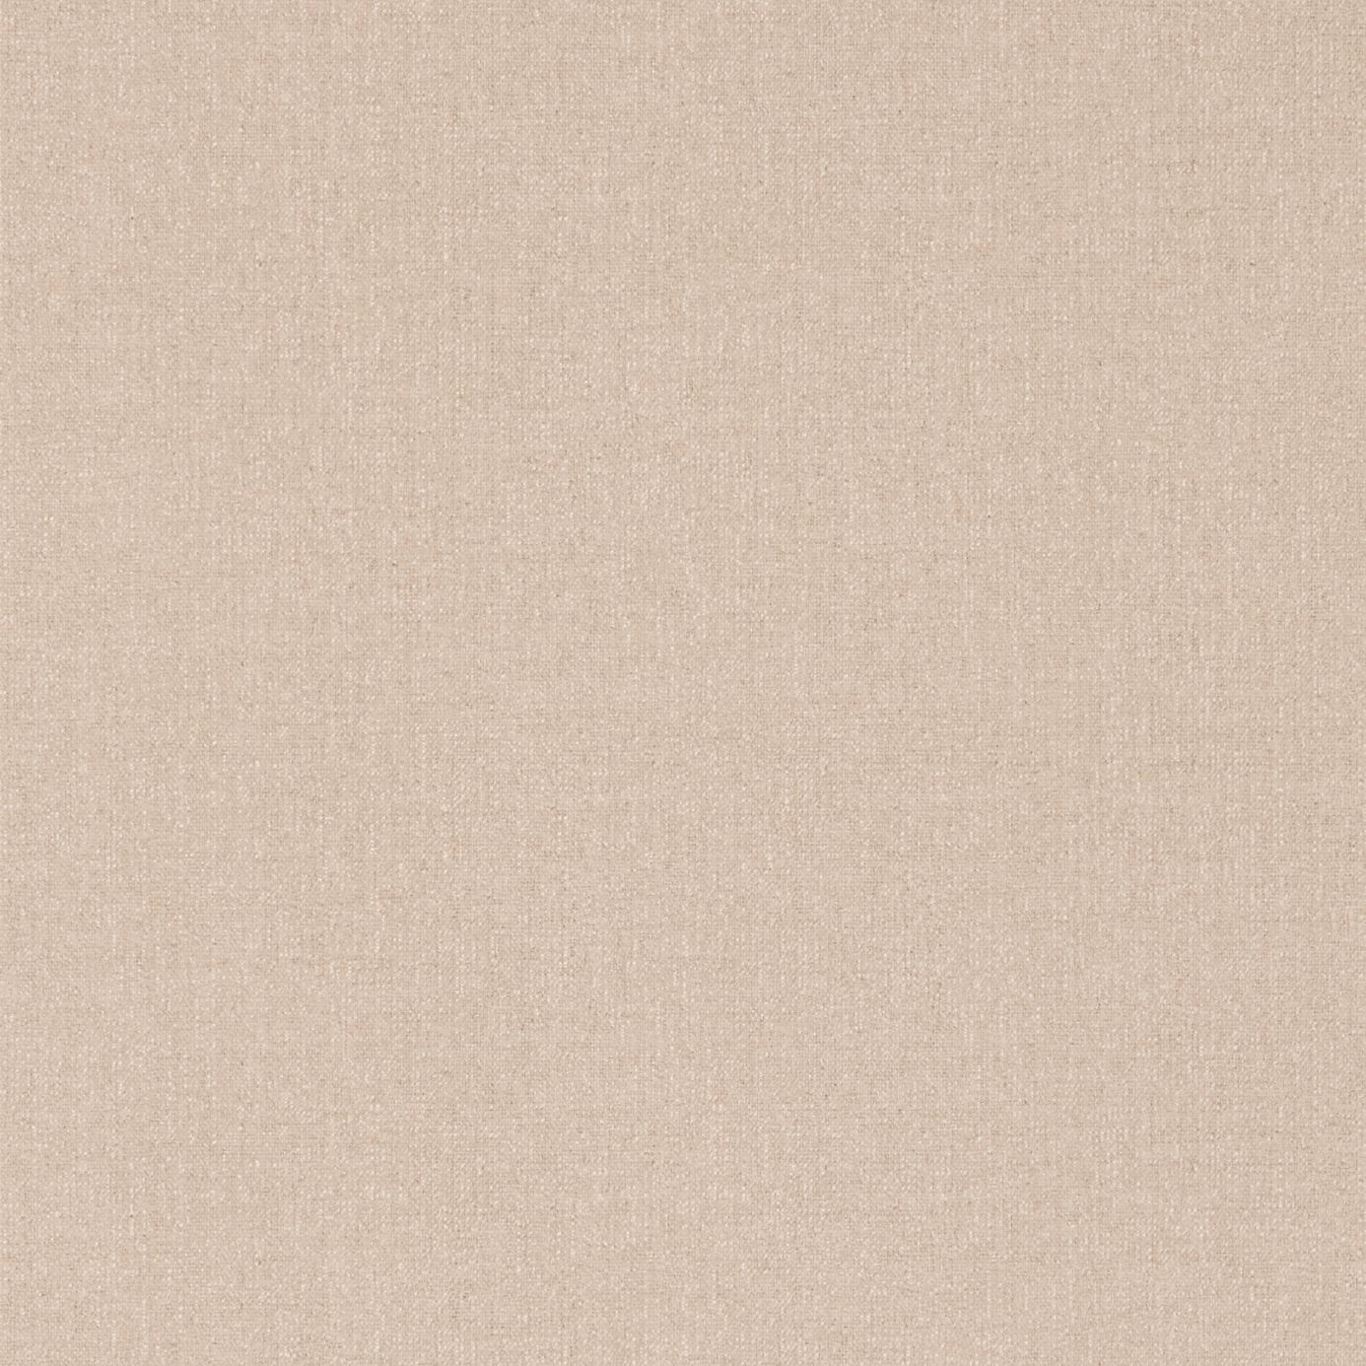 Soho Plain Linen Wallpaper by SAN